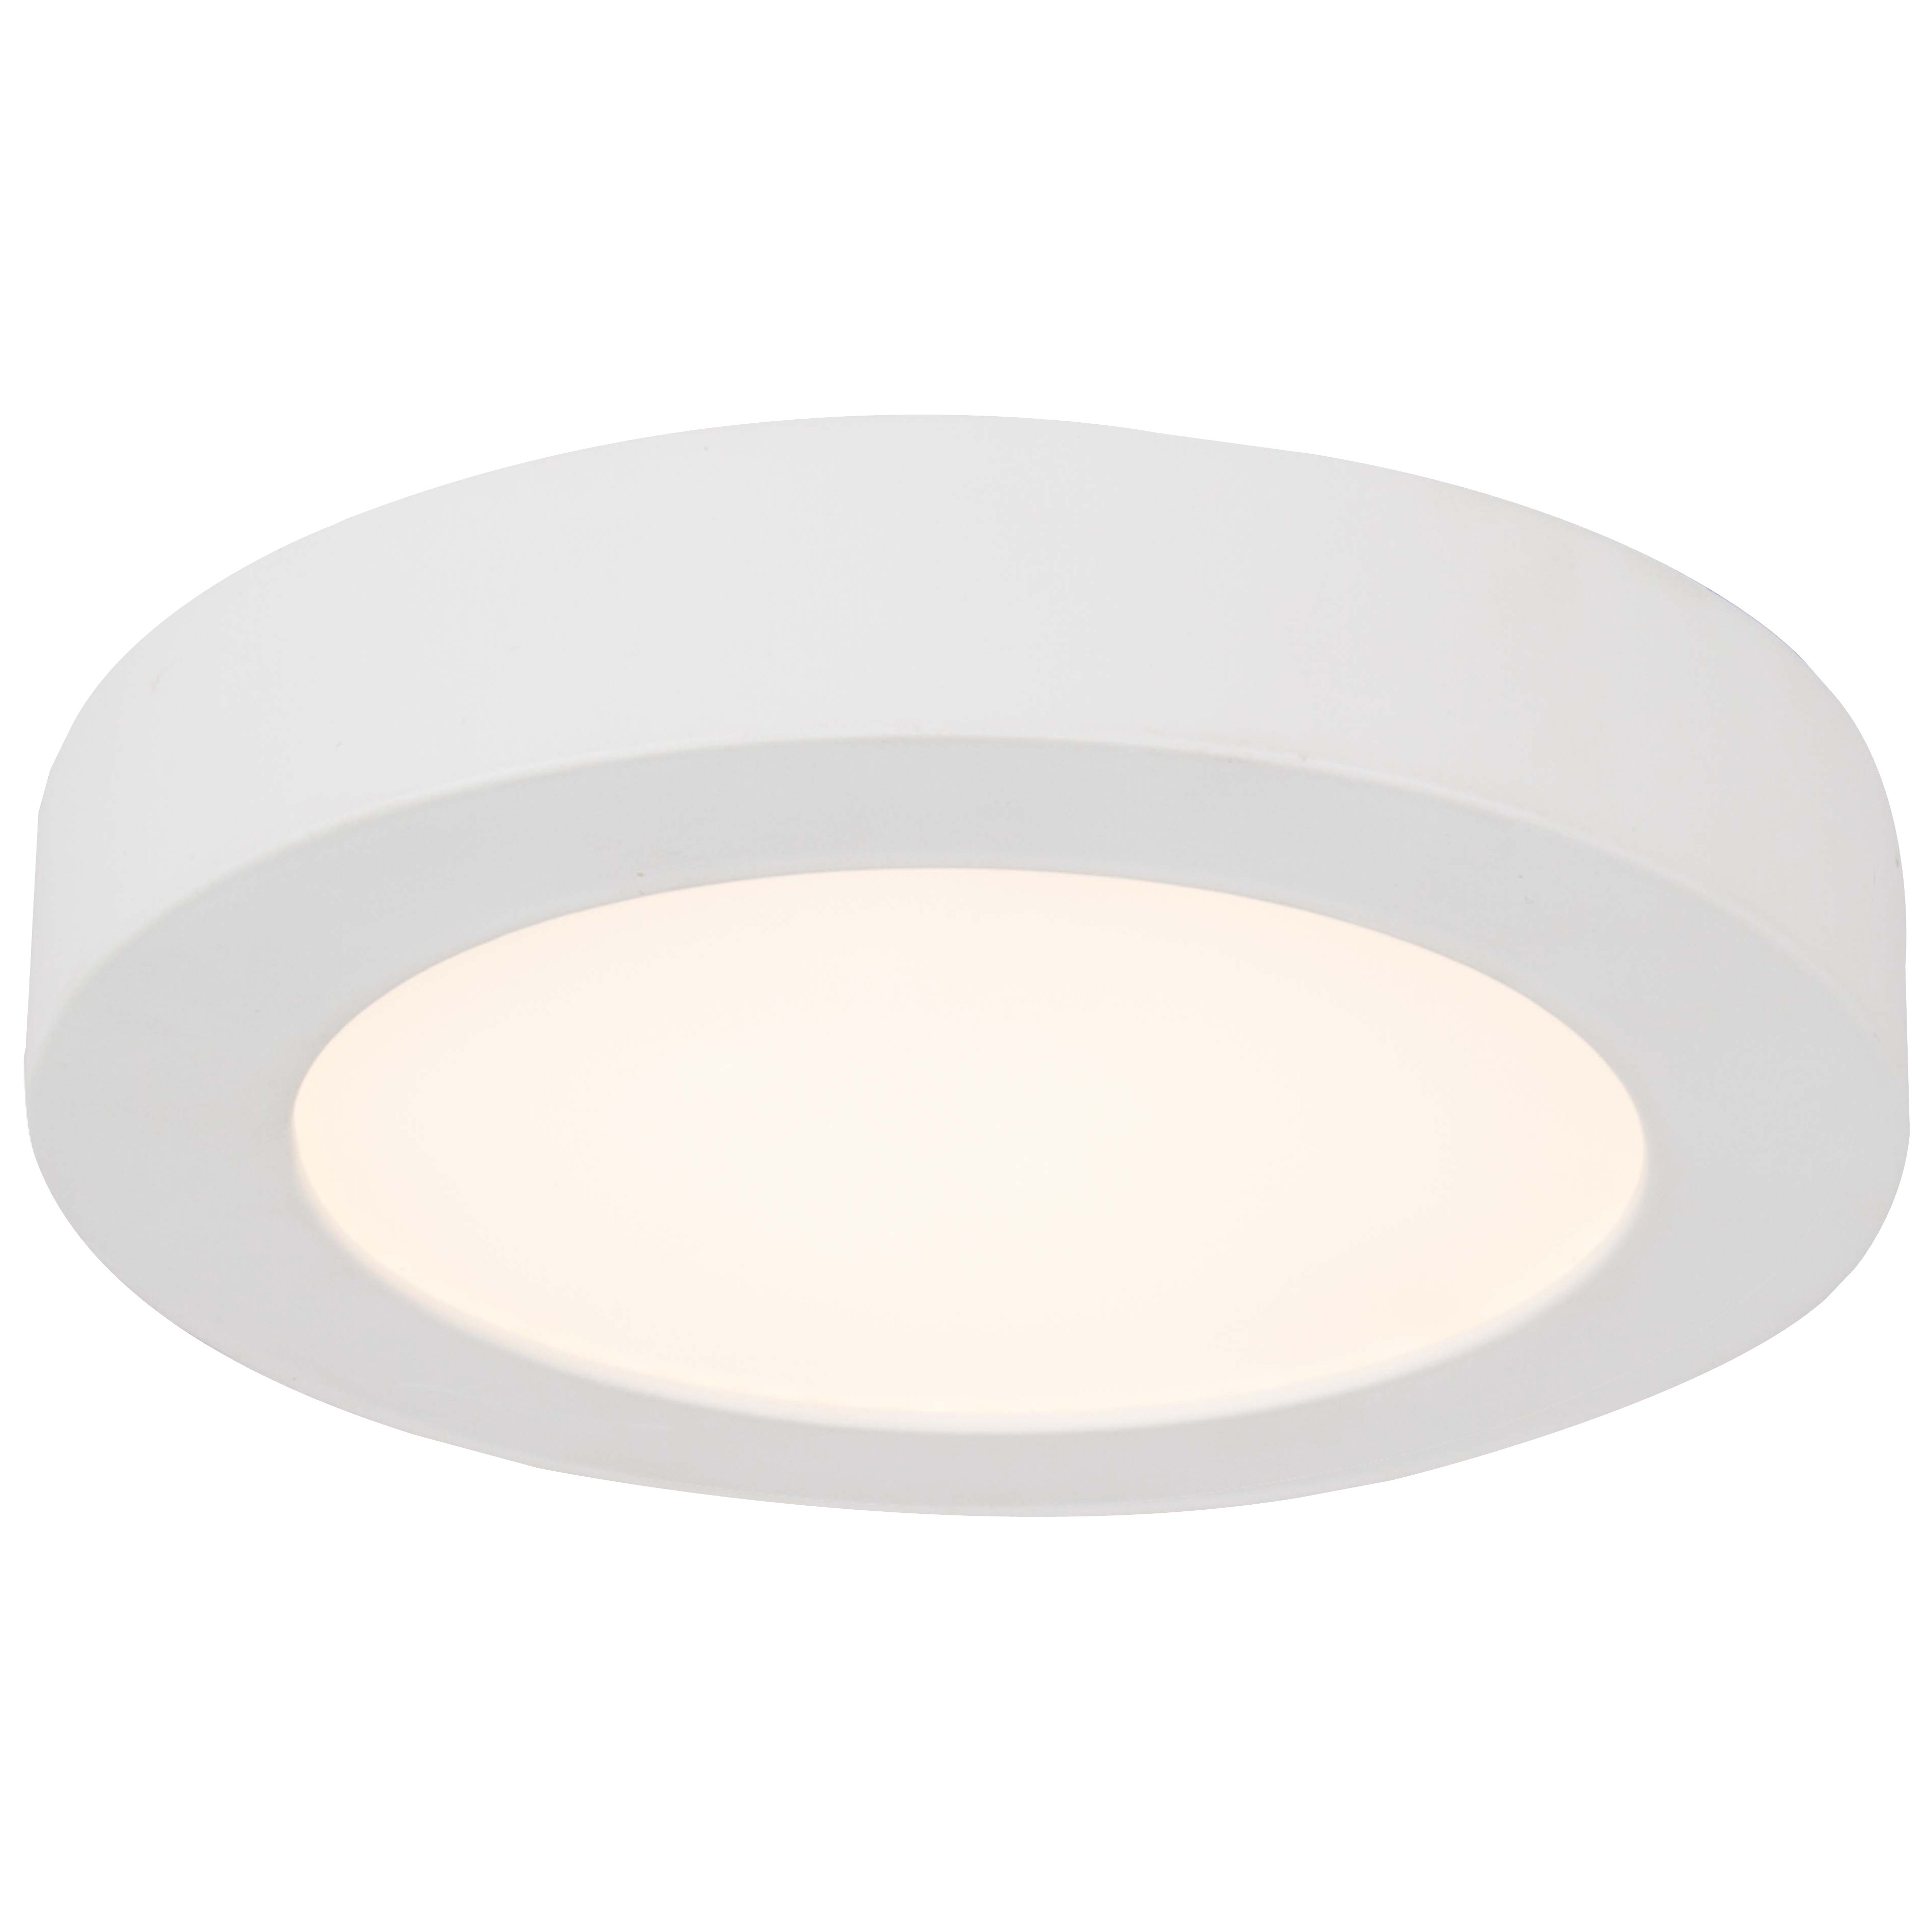 CL040A WH Ceiling Light Fixture, 0.08 A, 120 V, 10 W, LED Lamp, 550 Lumens, 3000 K Color Temp